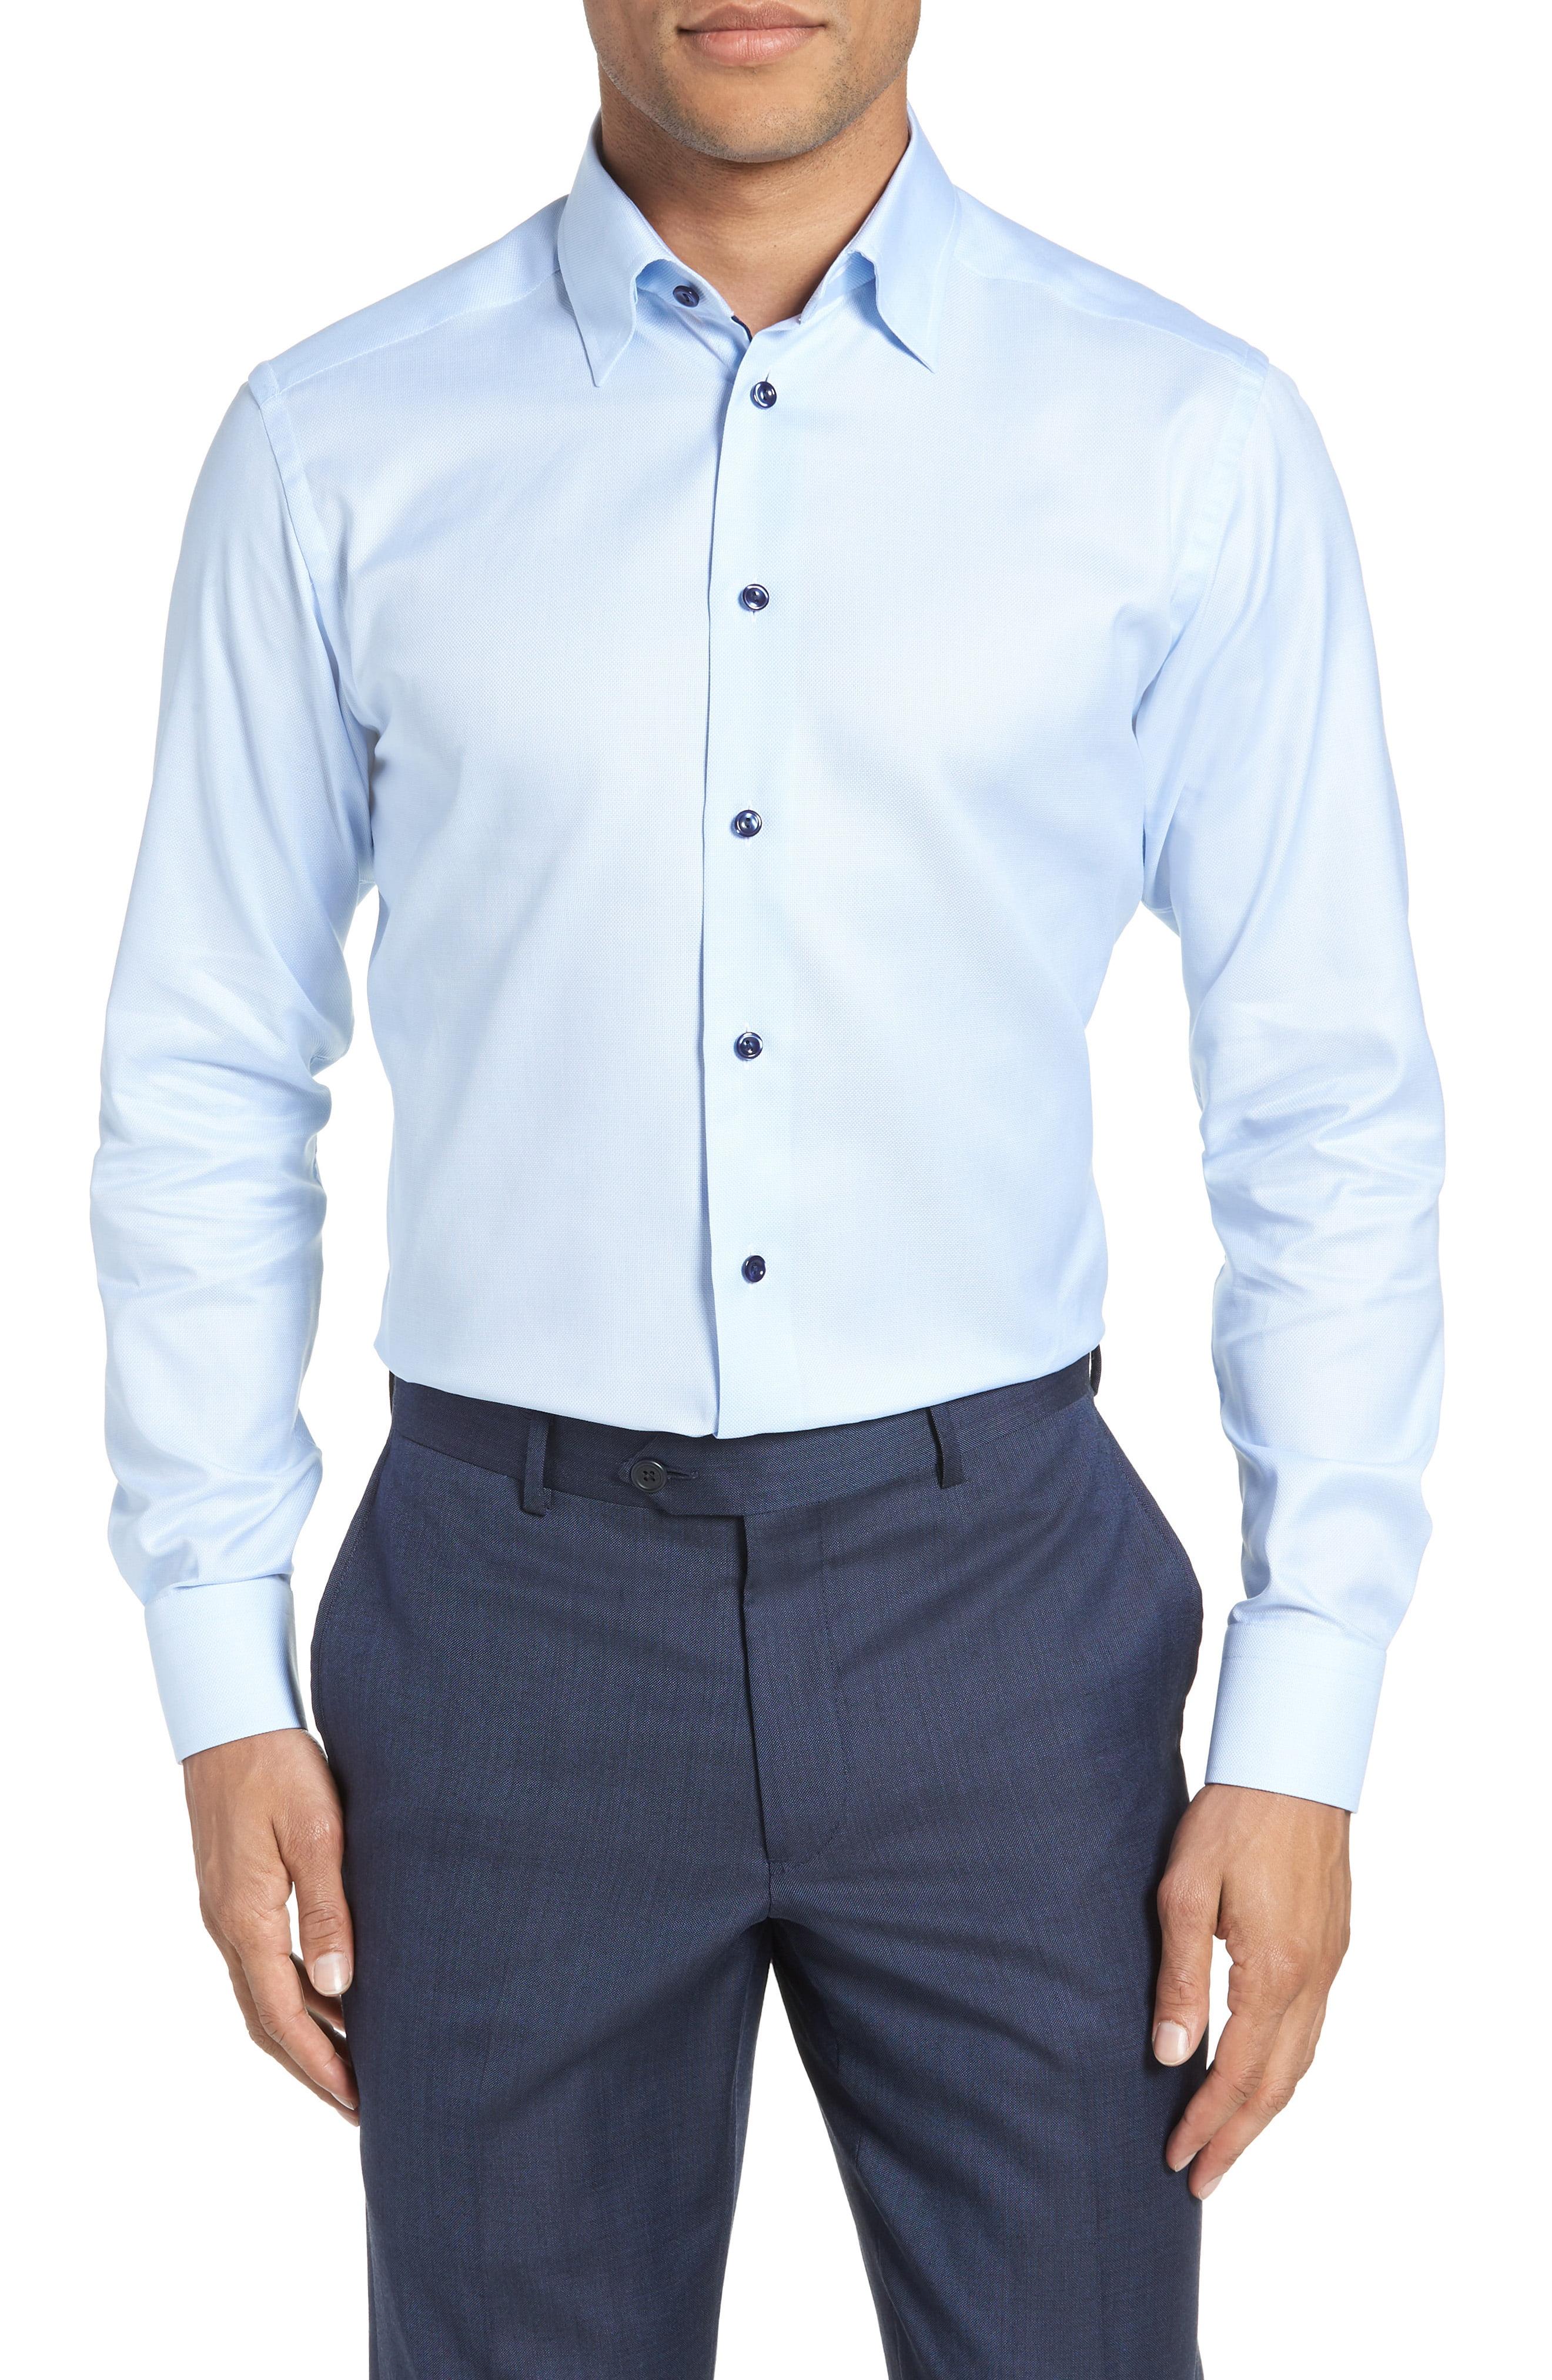 Eton Slim Fit Solid Dress Shirt in Blue for Men - Lyst